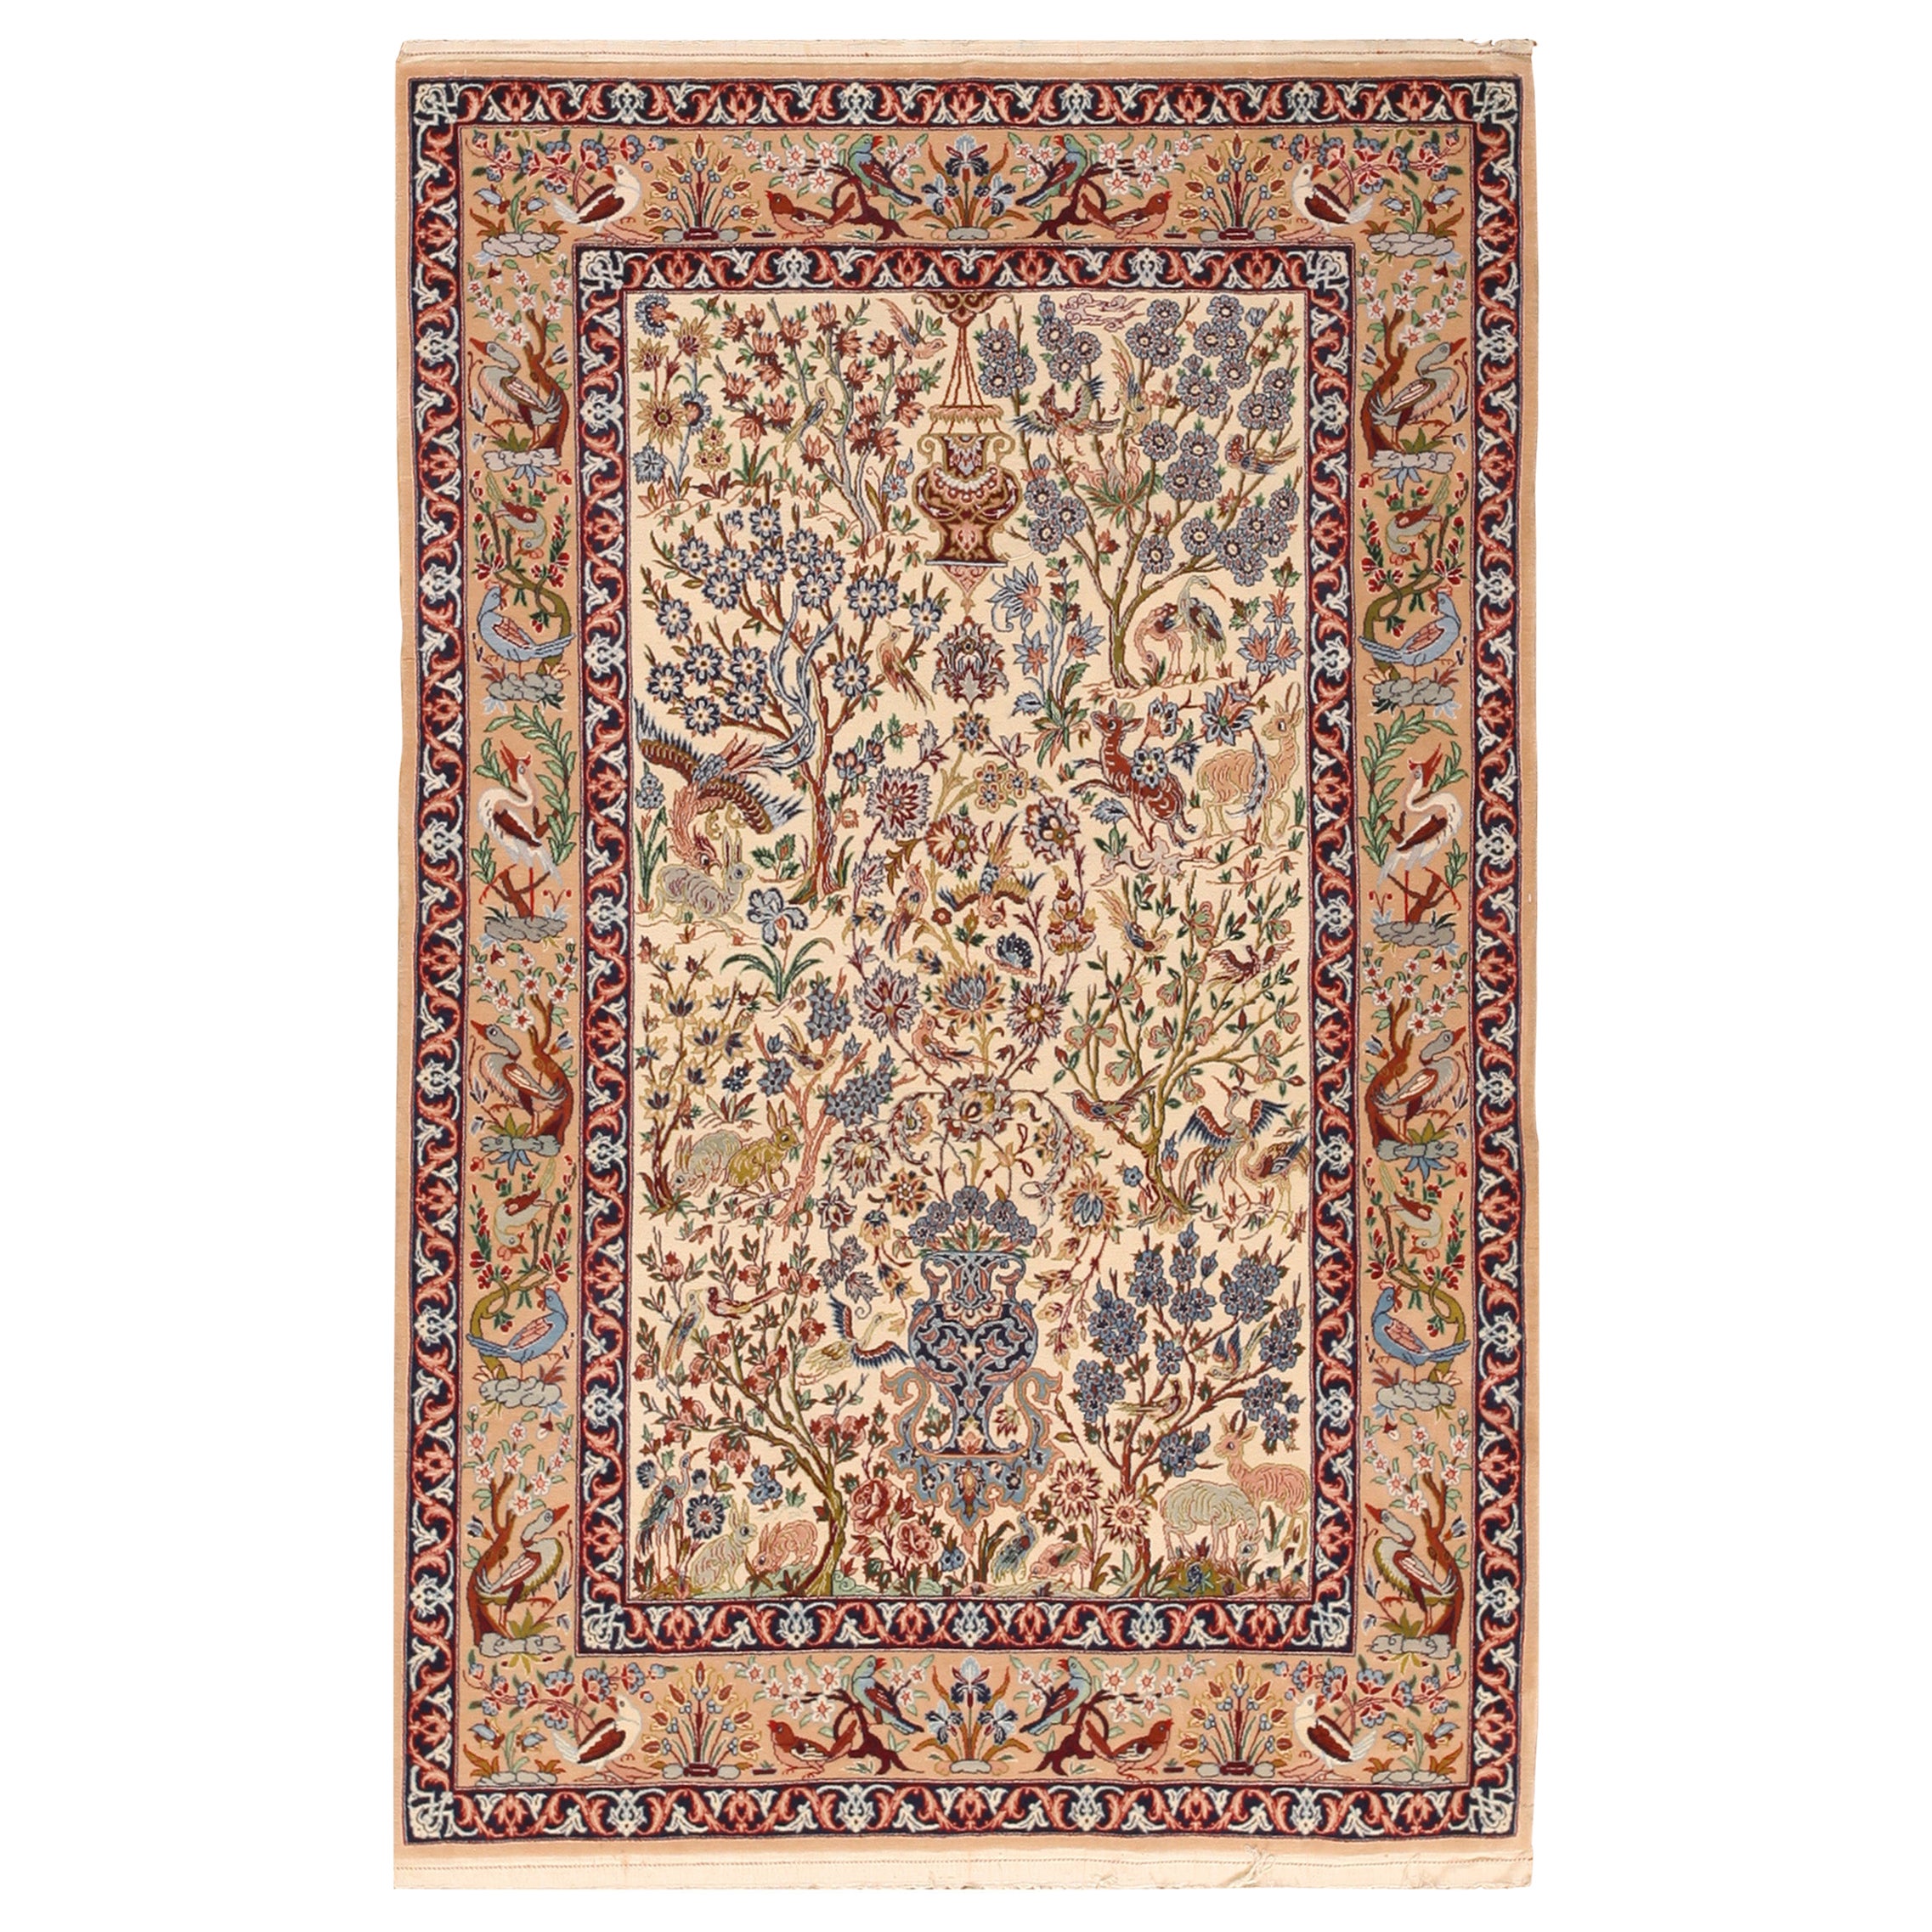 Mid 20th Century Persian Isfahan Carpet ( 3'7" x 5'5" - 110 x 165 cm )